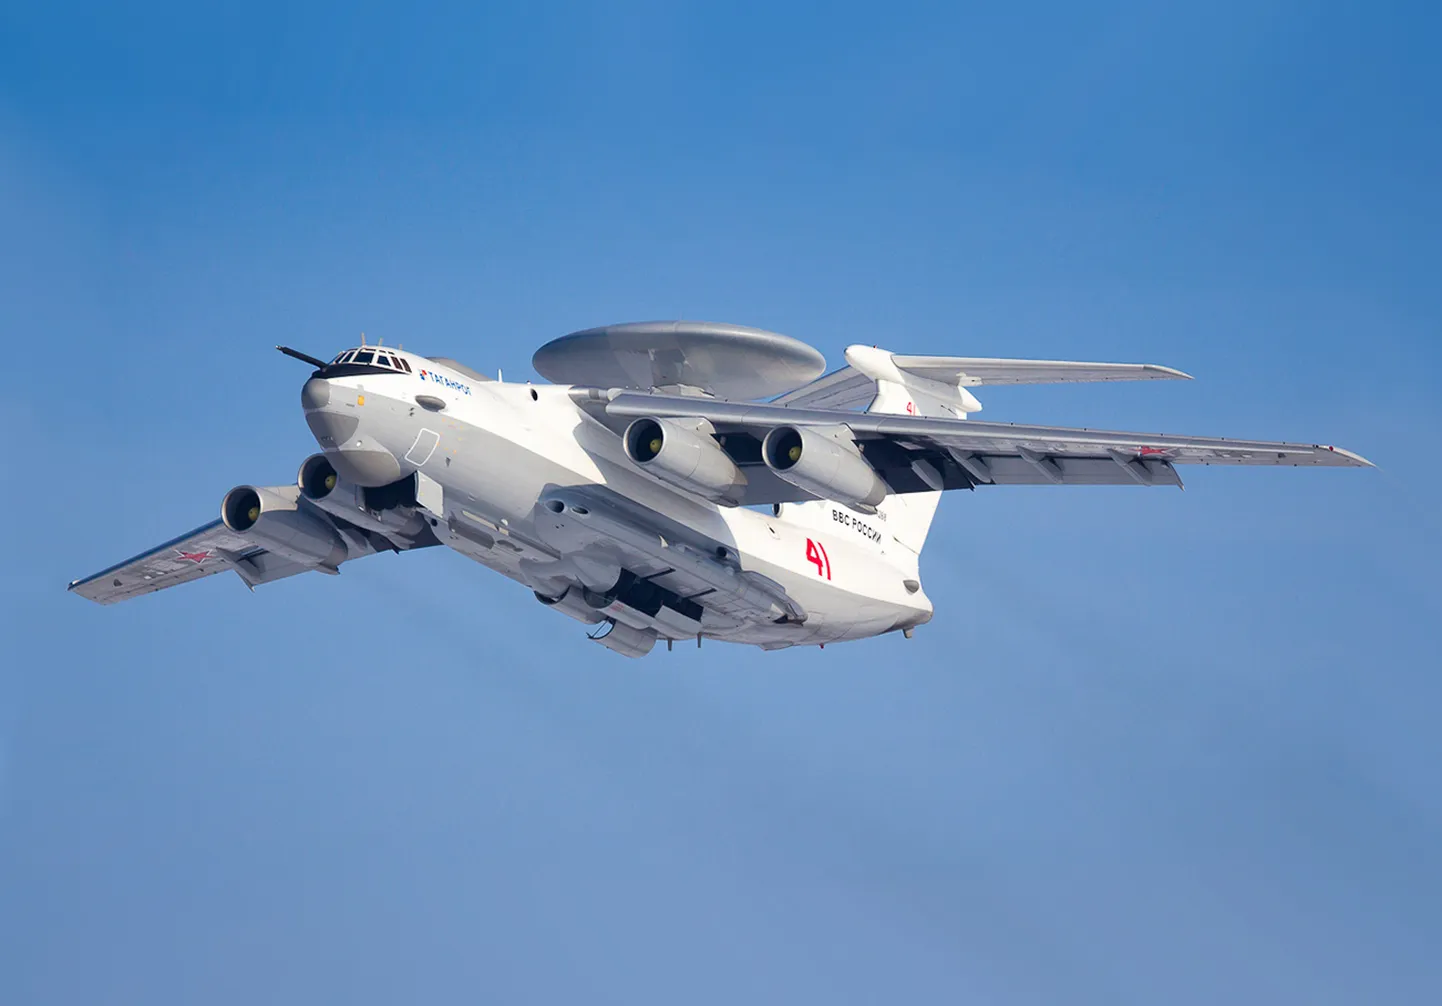 Vene õhuradarlennuki A-50. Foto illustreeriv